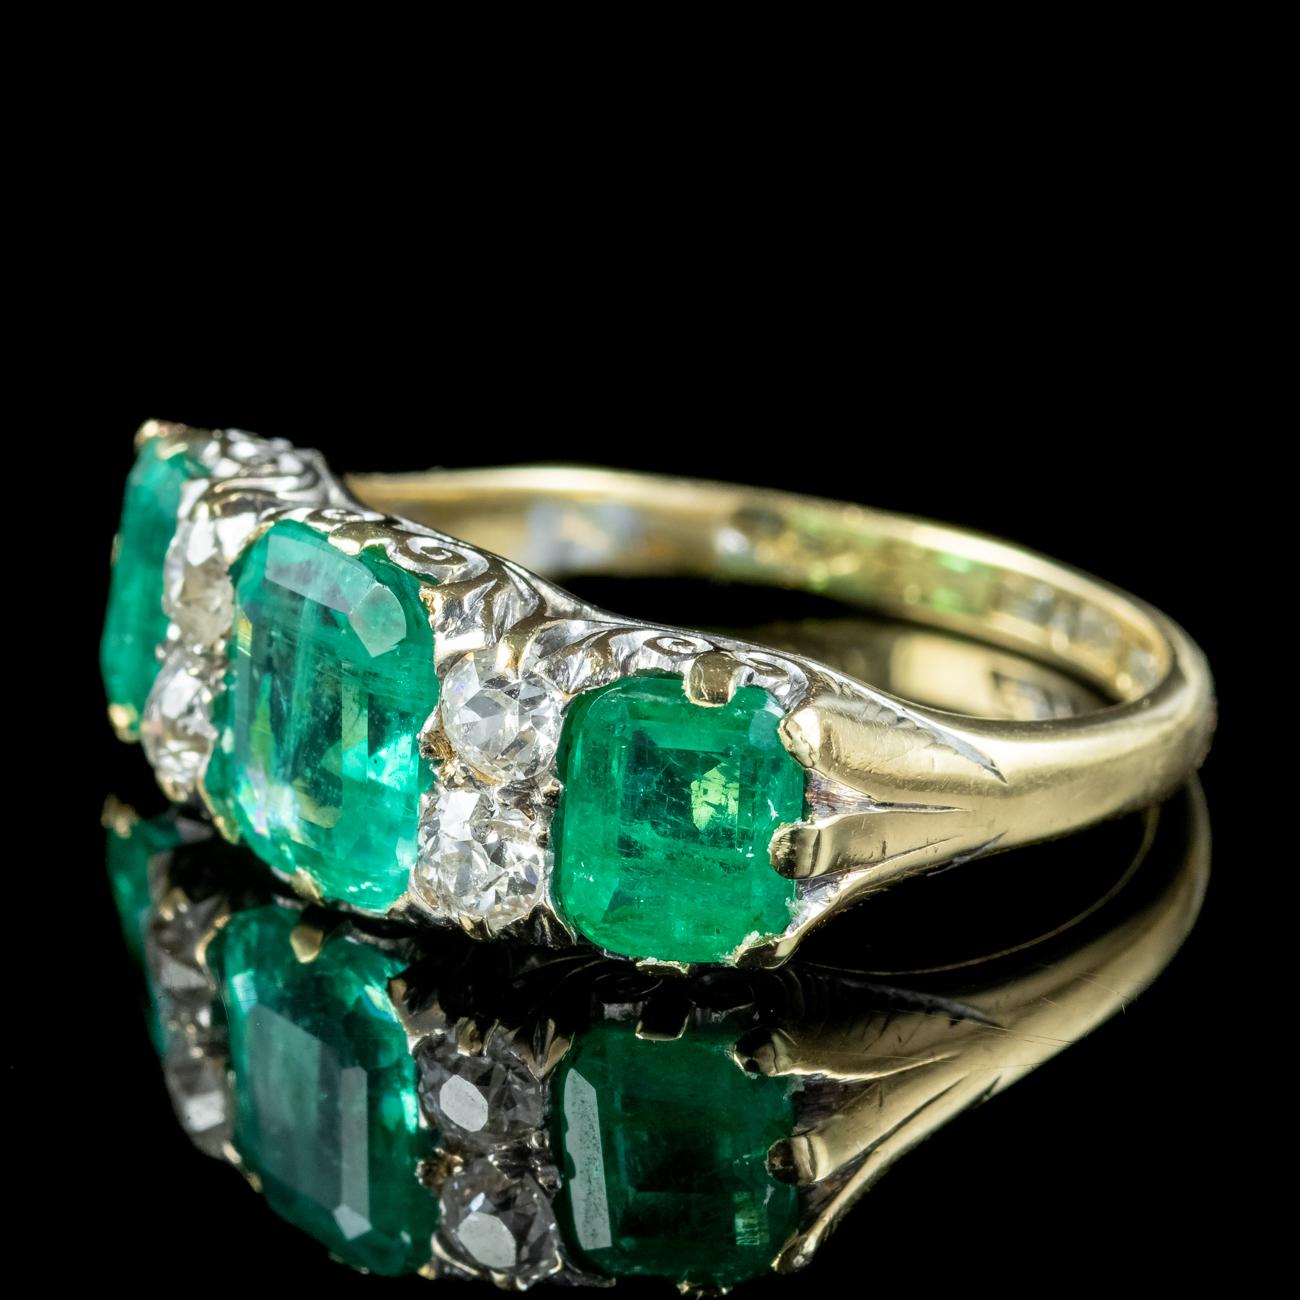 Antiker viktorianischer Smaragd-Diamant-Ring mit 3,07 Karat Smaragd, datiert 1900, zertifiziert (Alteuropäischer Schliff) im Angebot